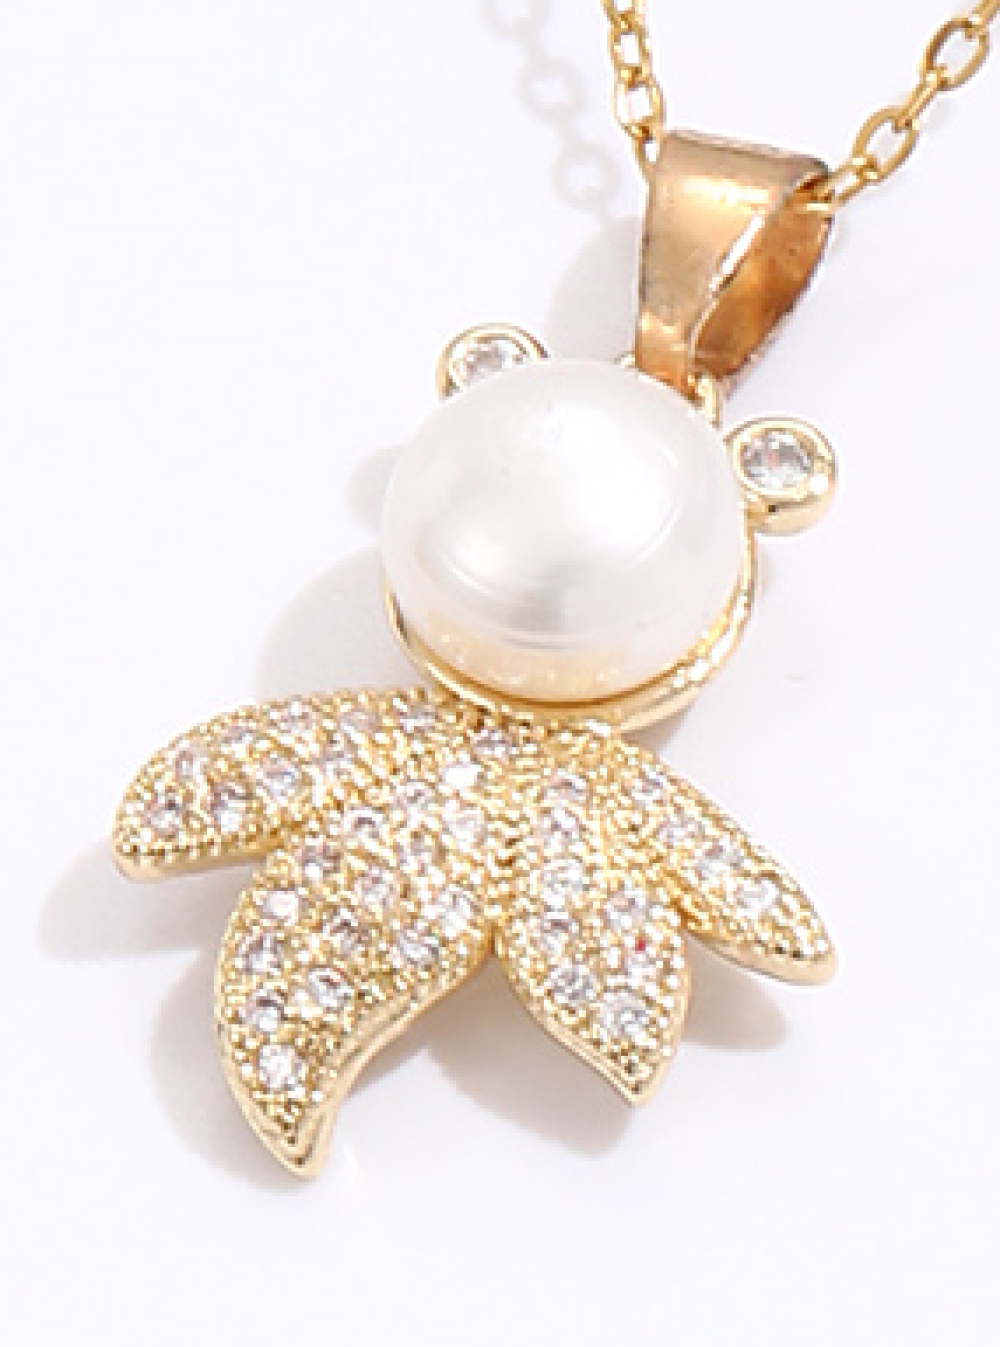 10pcs Gold Tone Cute Leaf Man with Pearl Pendant Necklace|GCJ305|UK SELLER